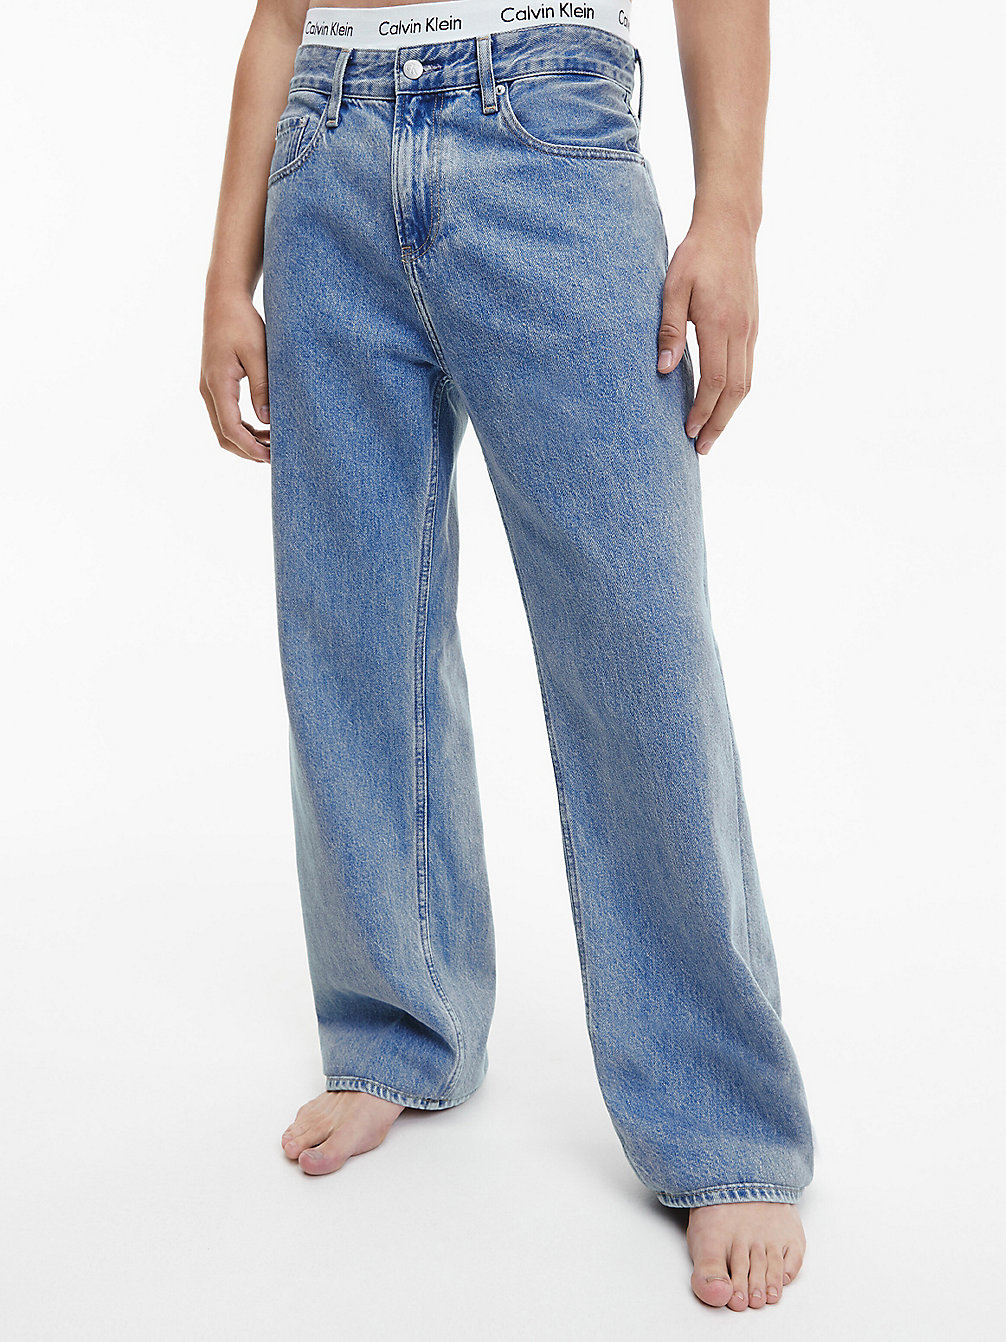 DENIM LIGHT 90's Loose Jeans undefined Herren Calvin Klein